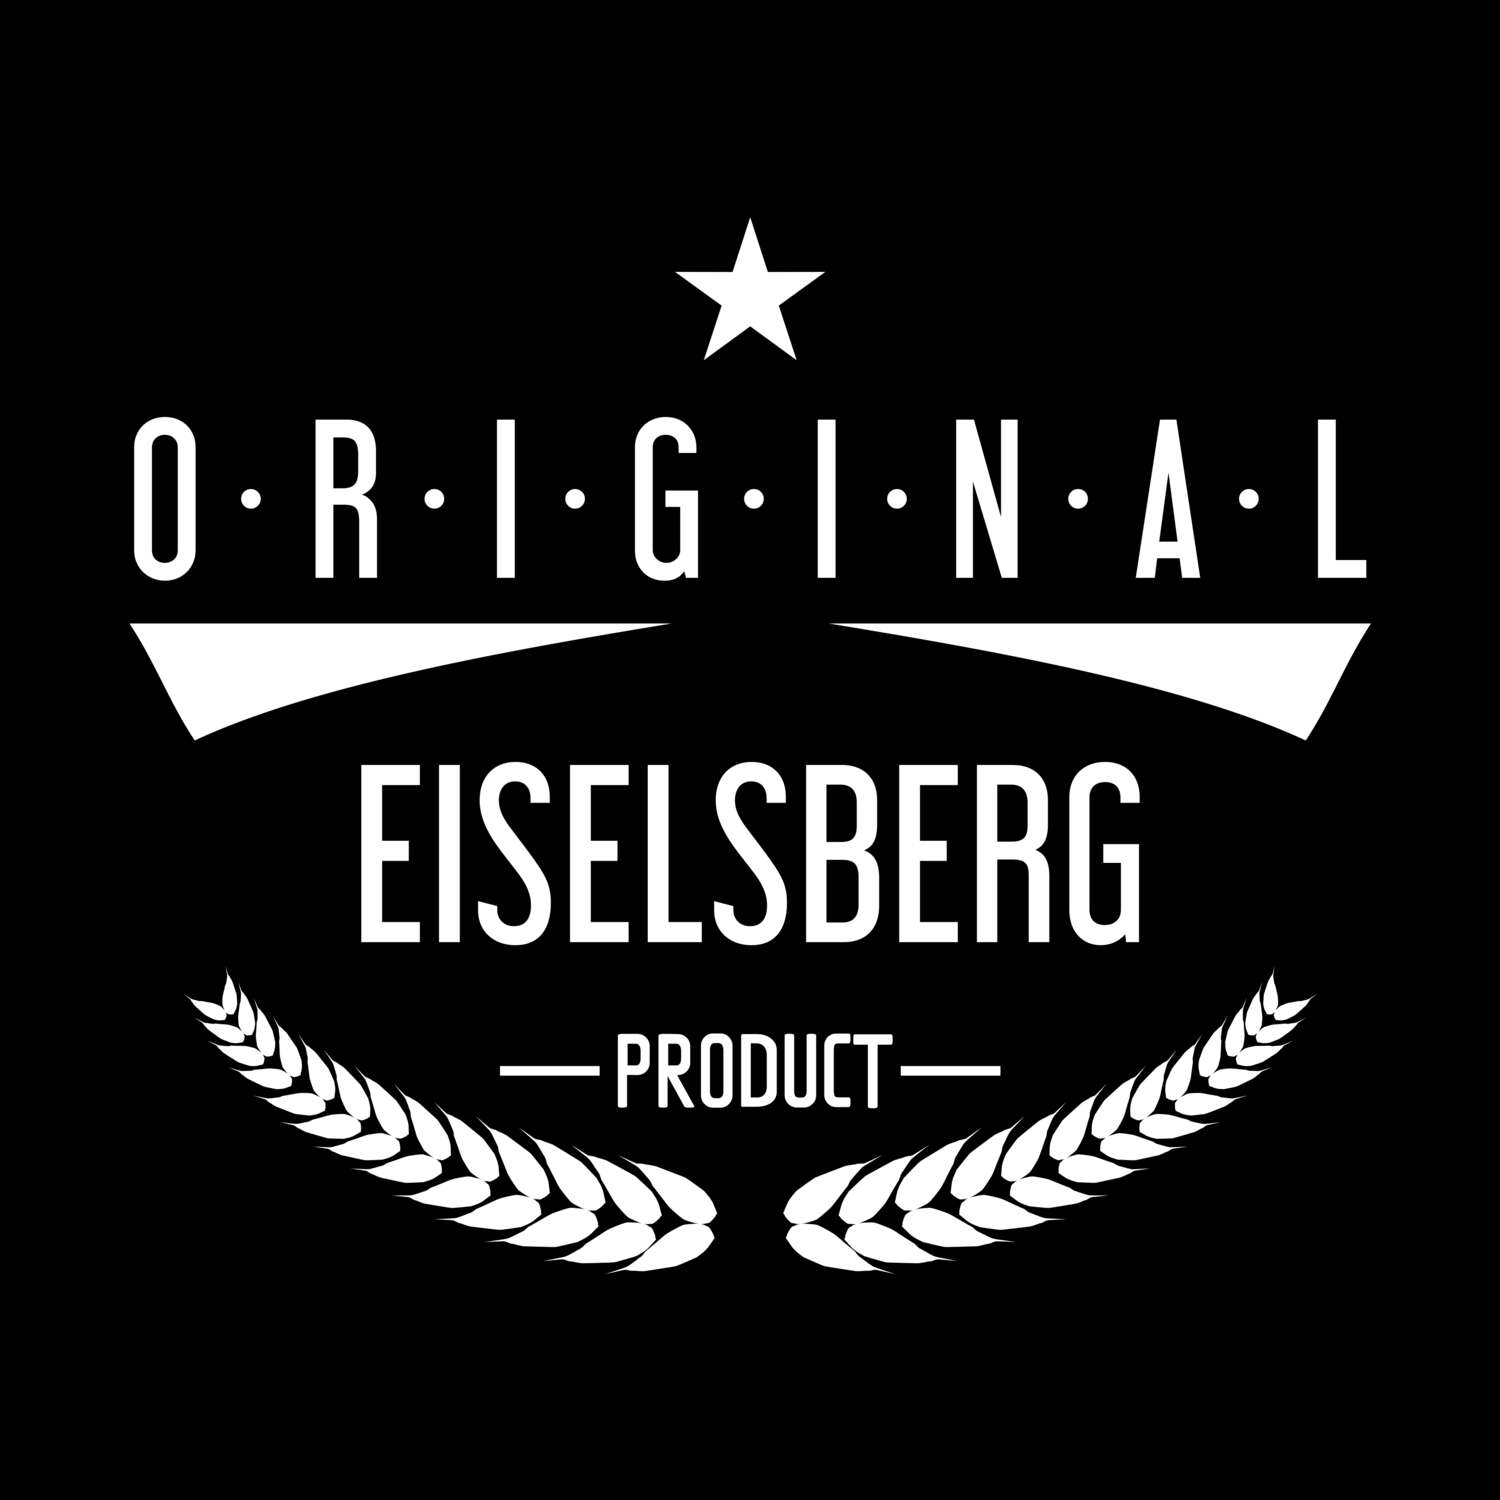 Eiselsberg T-Shirt »Original Product«